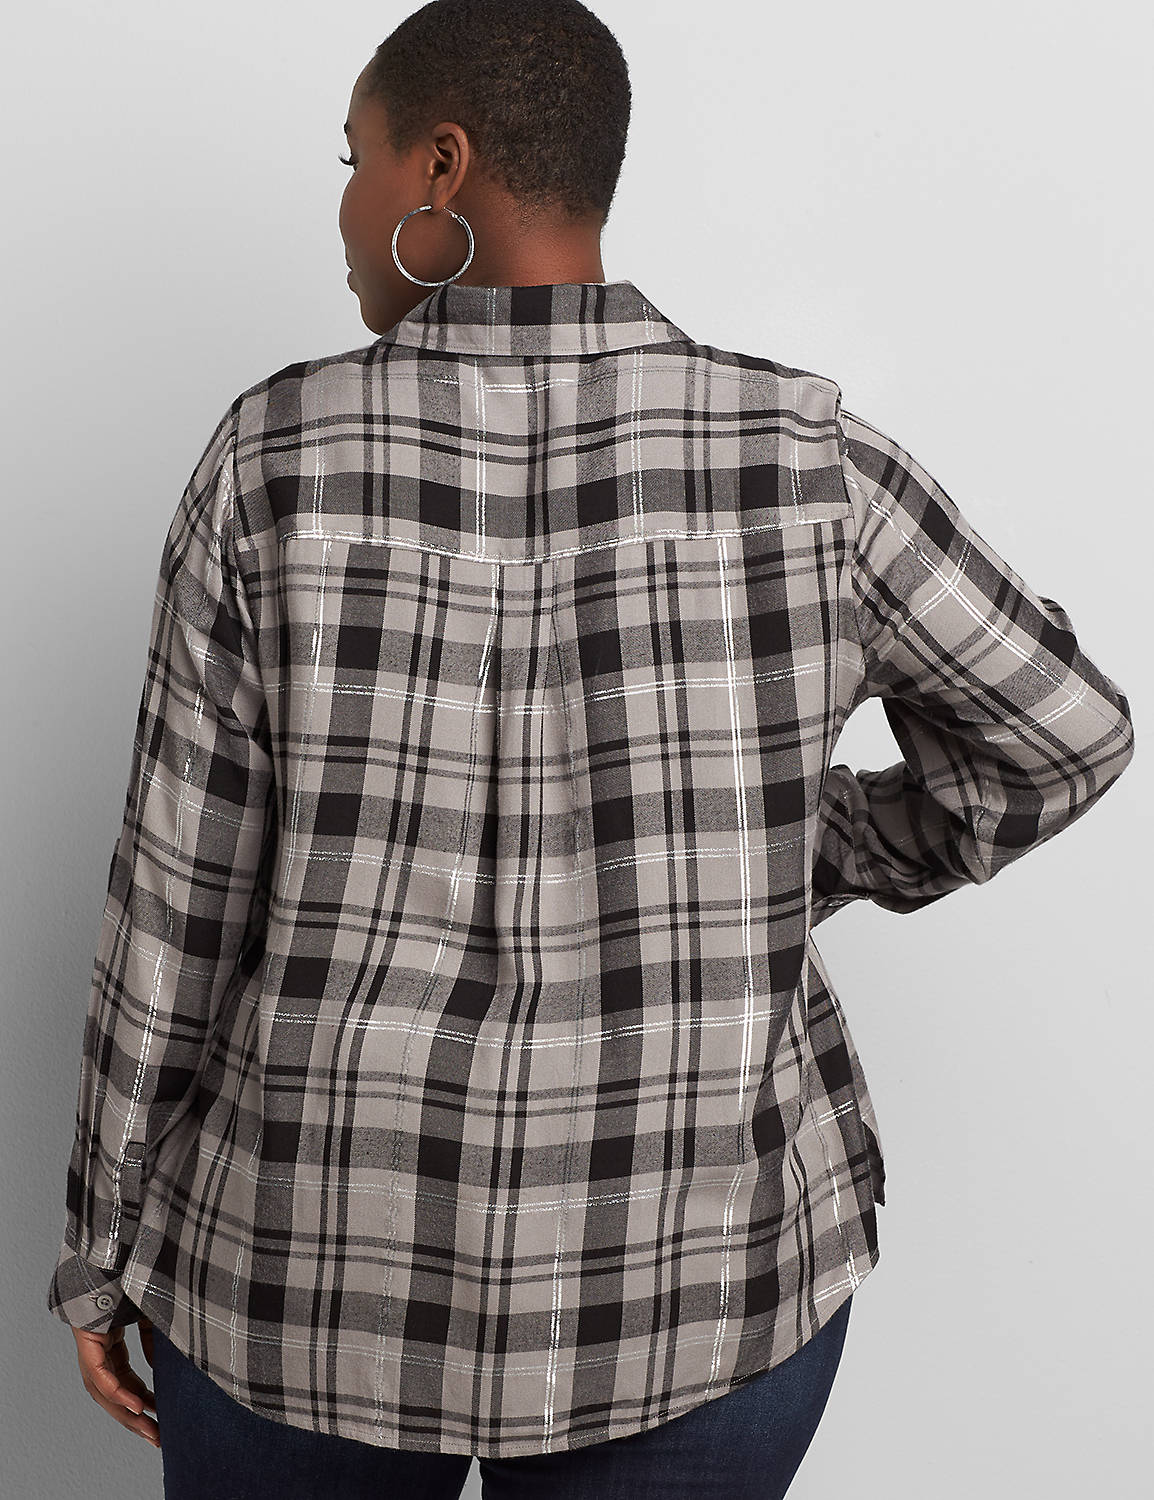 Long Sleeve Button Front Lurex Plaid Boyfriend Shirt 1117085:LBH20240_SimpleEvaPlaid_colorway1:14/16 Product Image 2